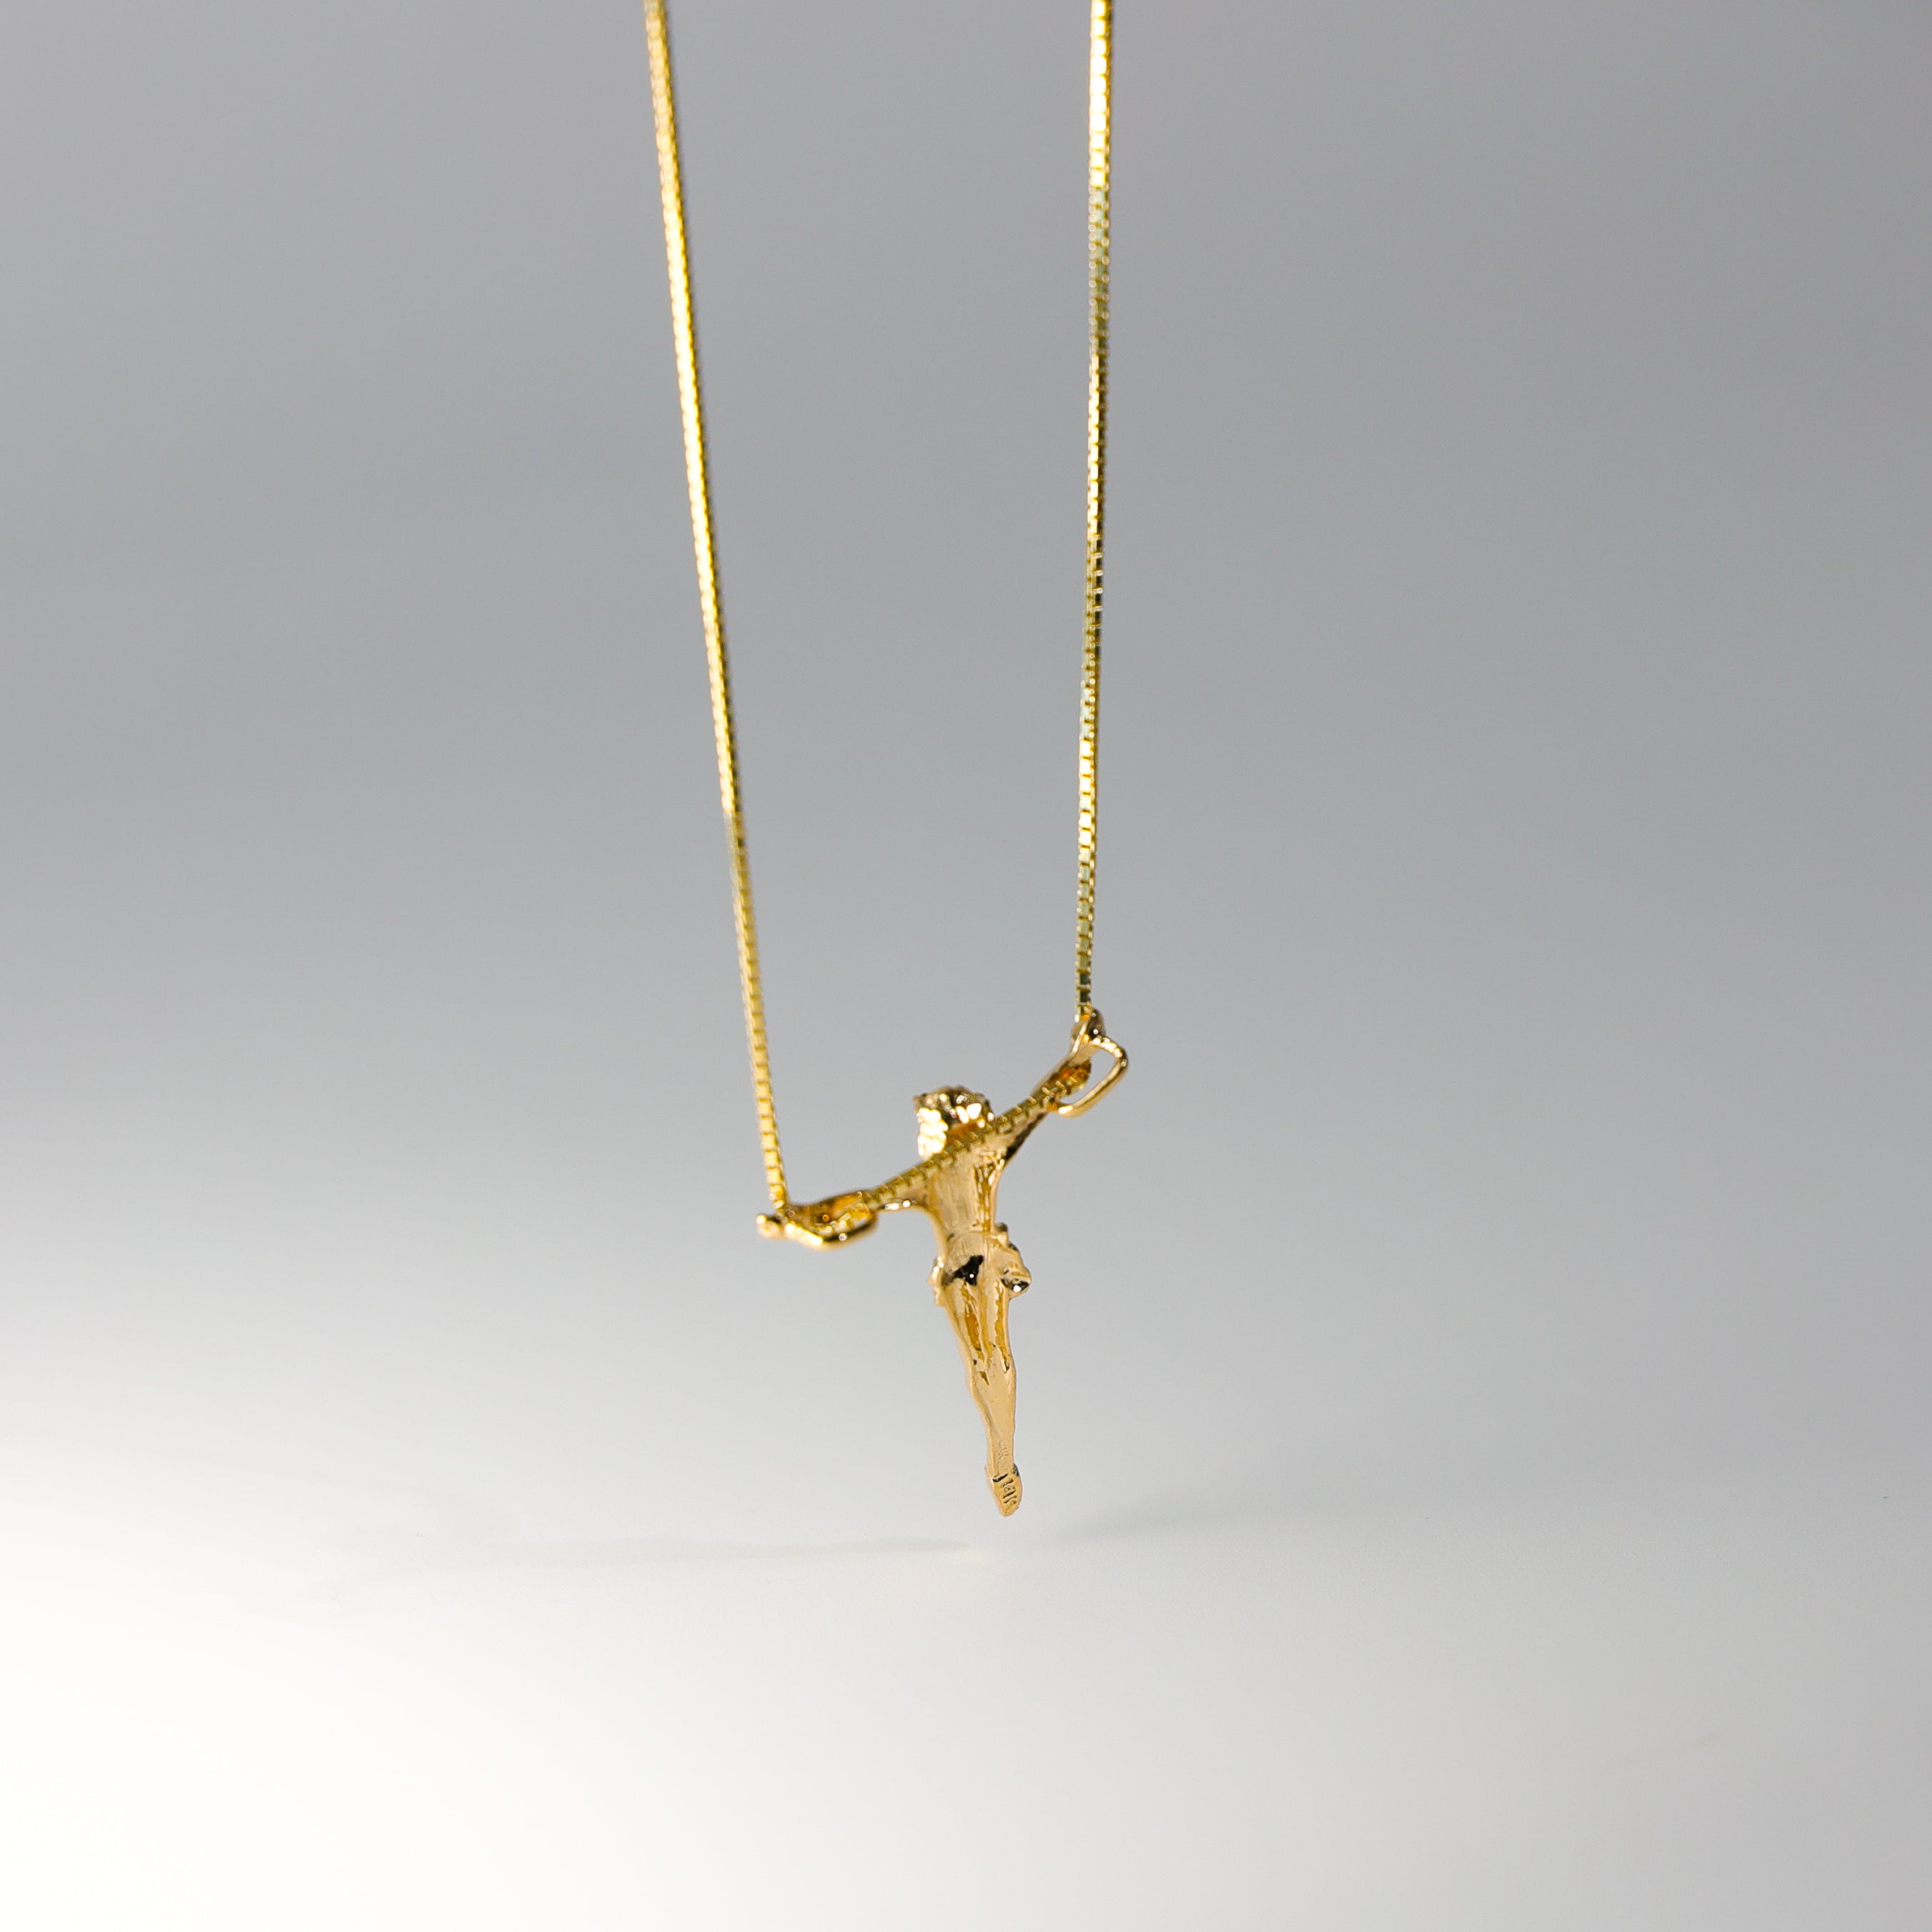 Gold Jesus Christ Body Pendant Model-1201 - Charlie & Co. Jewelry